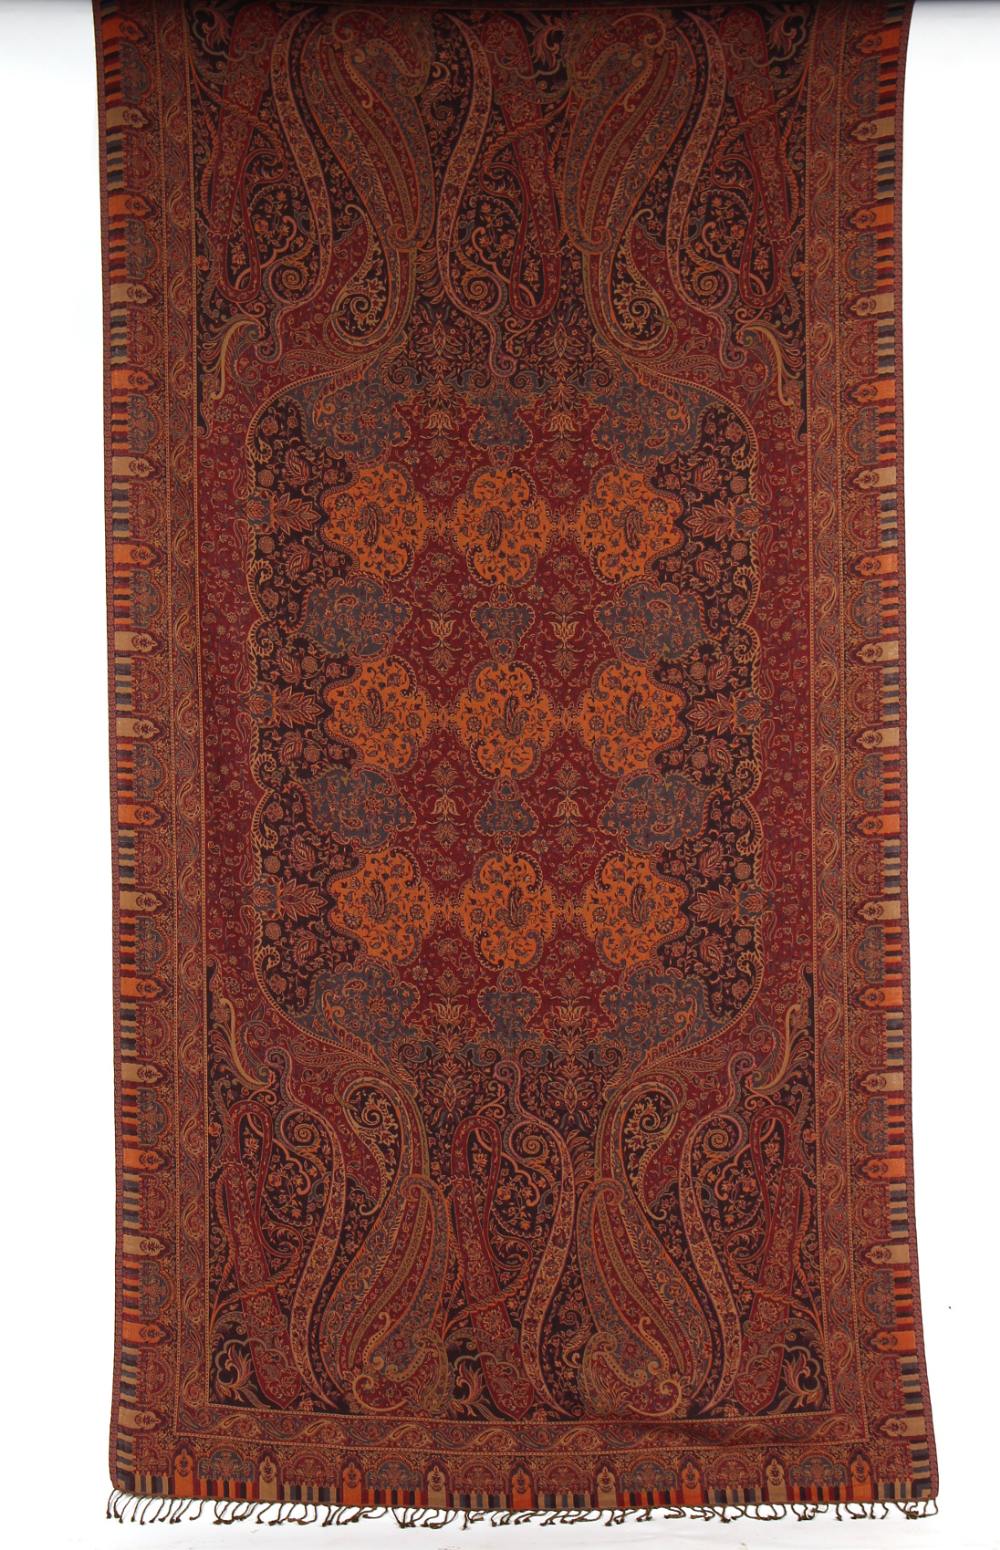 A large Indian paisley shawl.